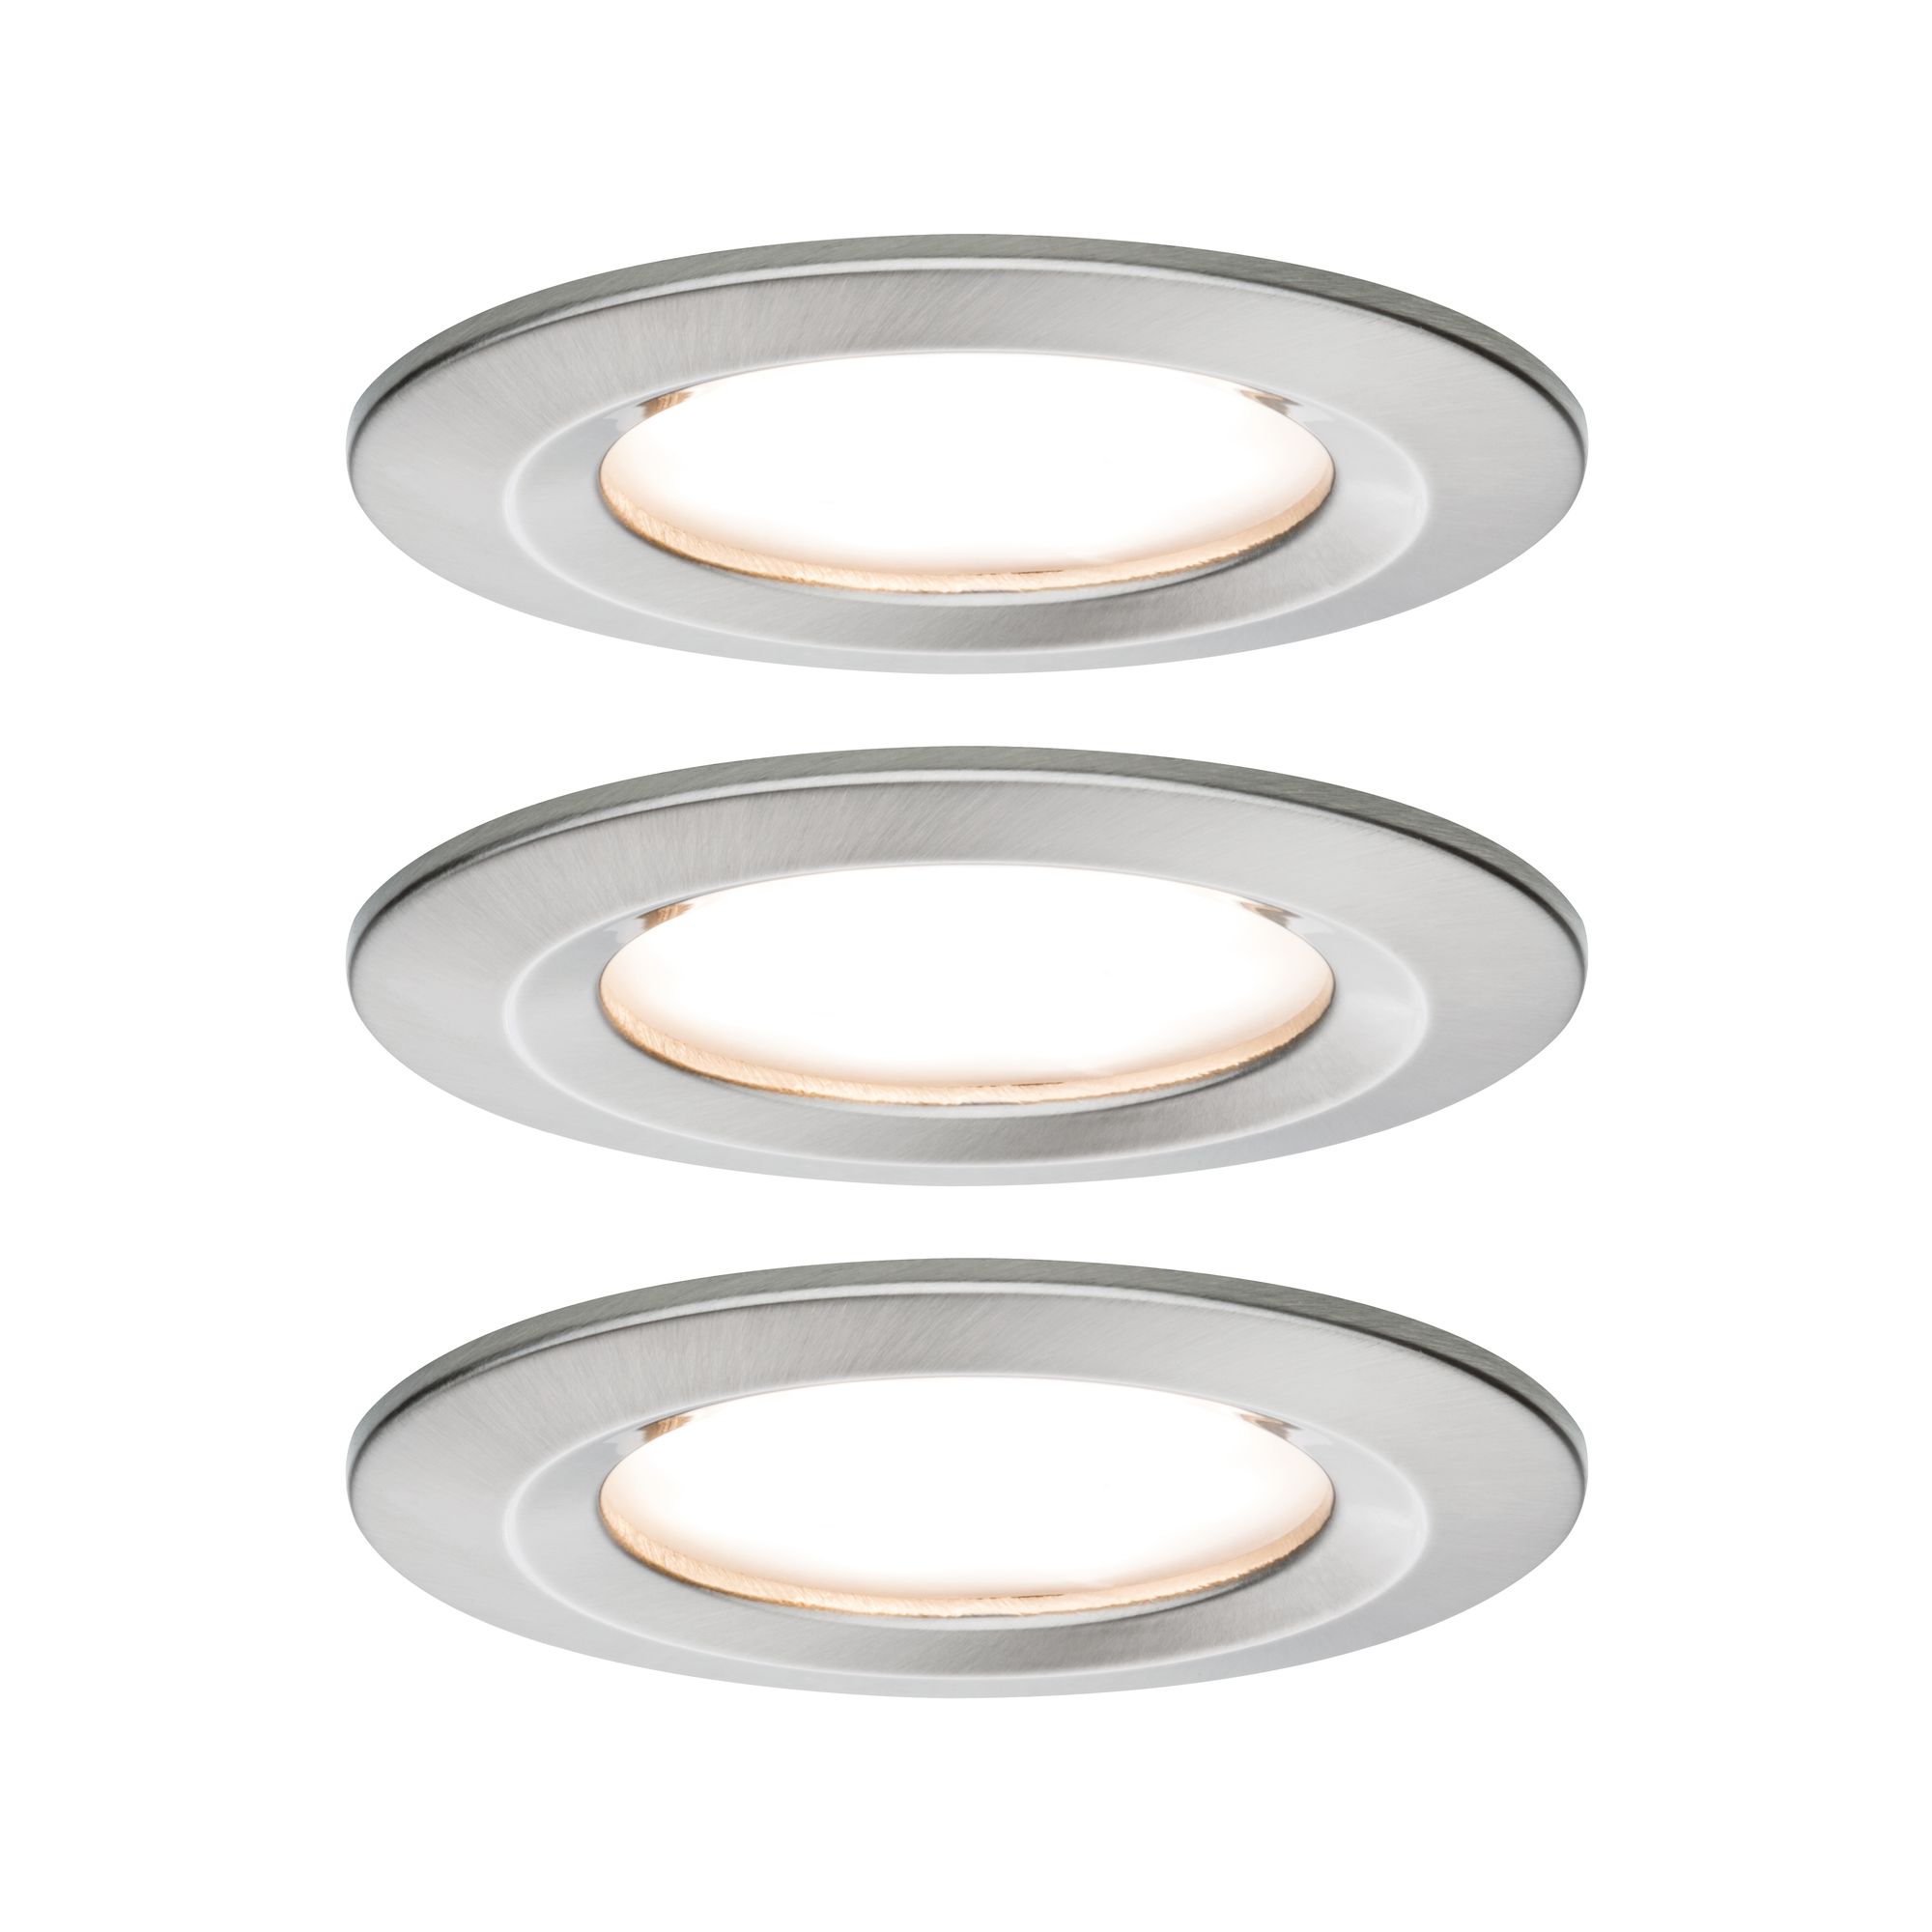 PAULMANN - Vestavné svítidlo LED Nova kruhové 3x6,5W kov kartáčovaný nevýklopné, P 93458